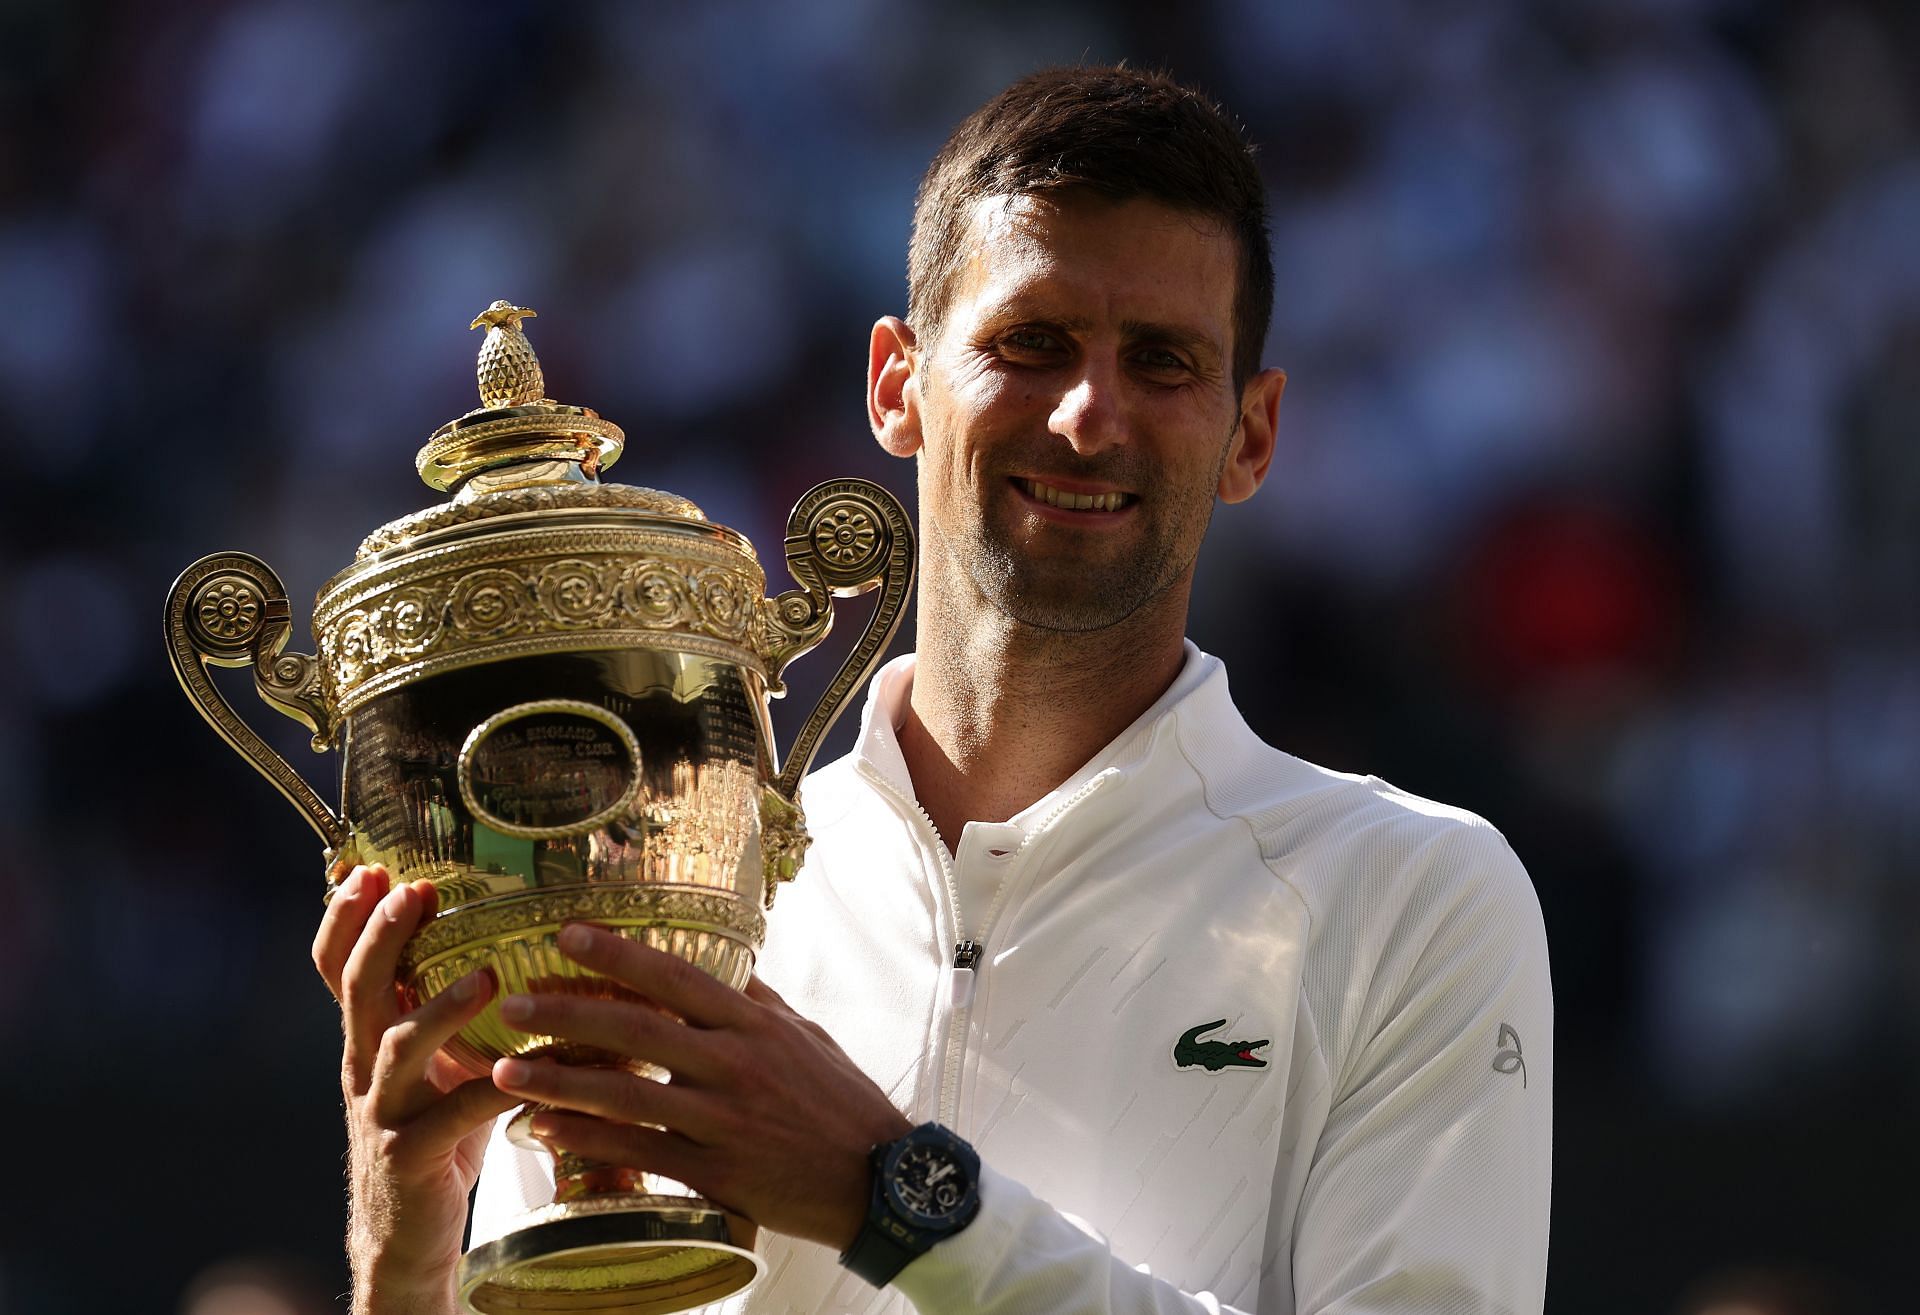 Novak Djokovic is still the player to beat at Wimbledon